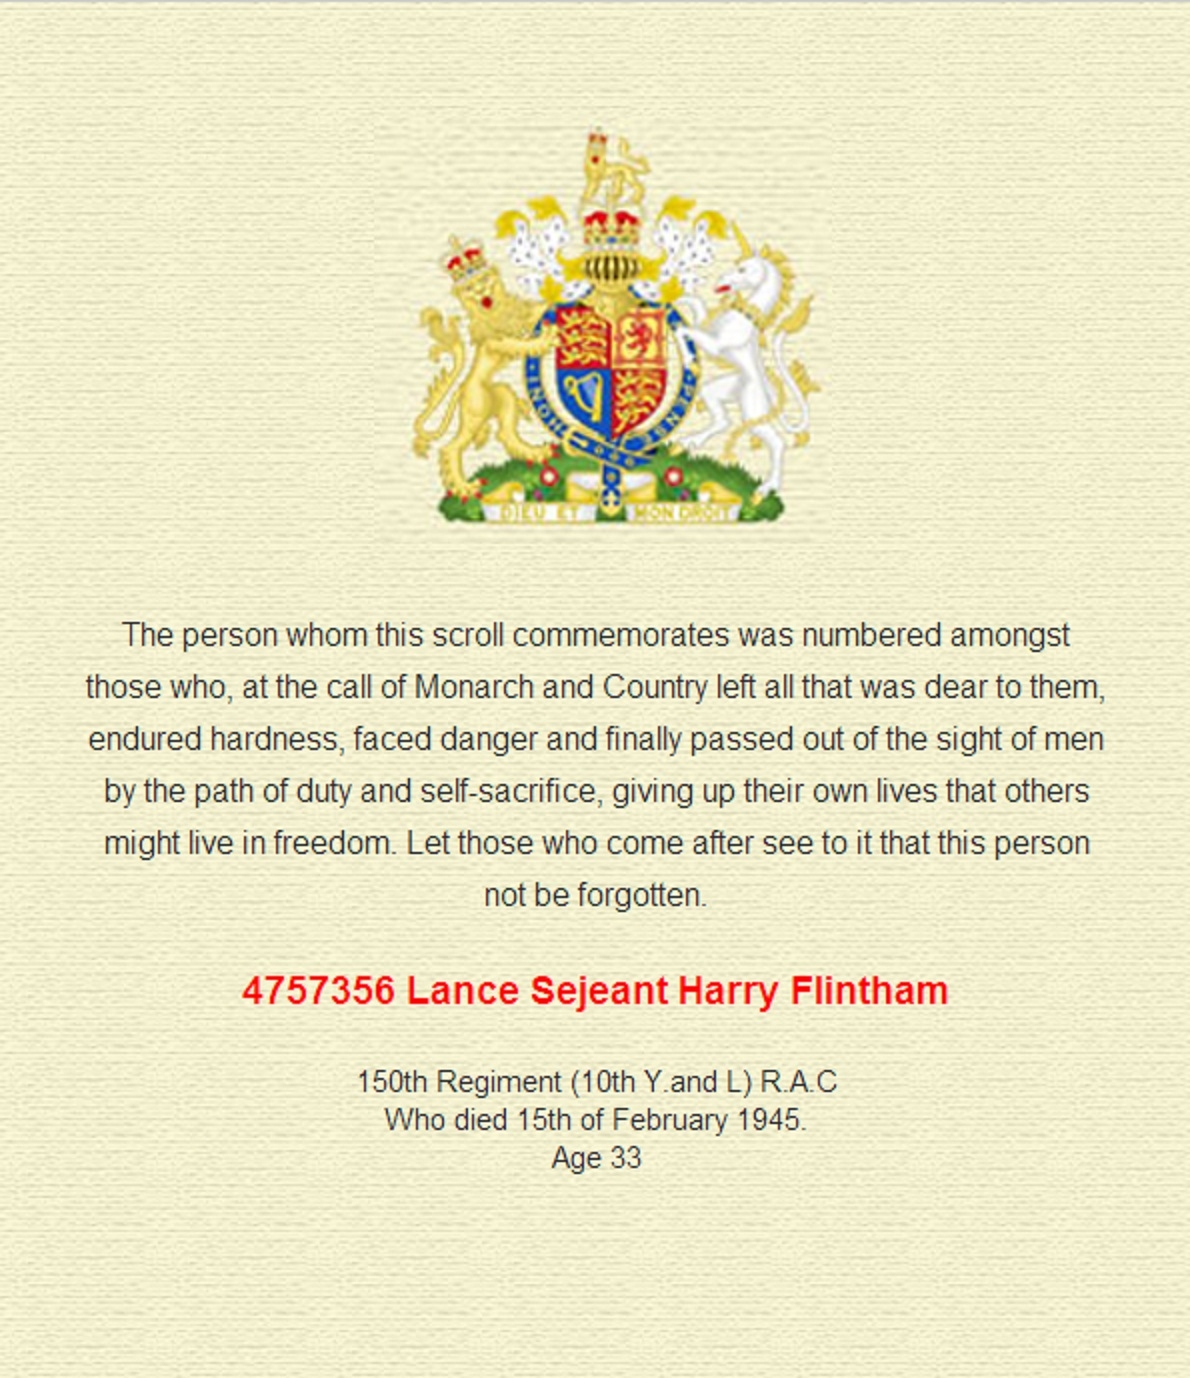 Harry Flintham scroll